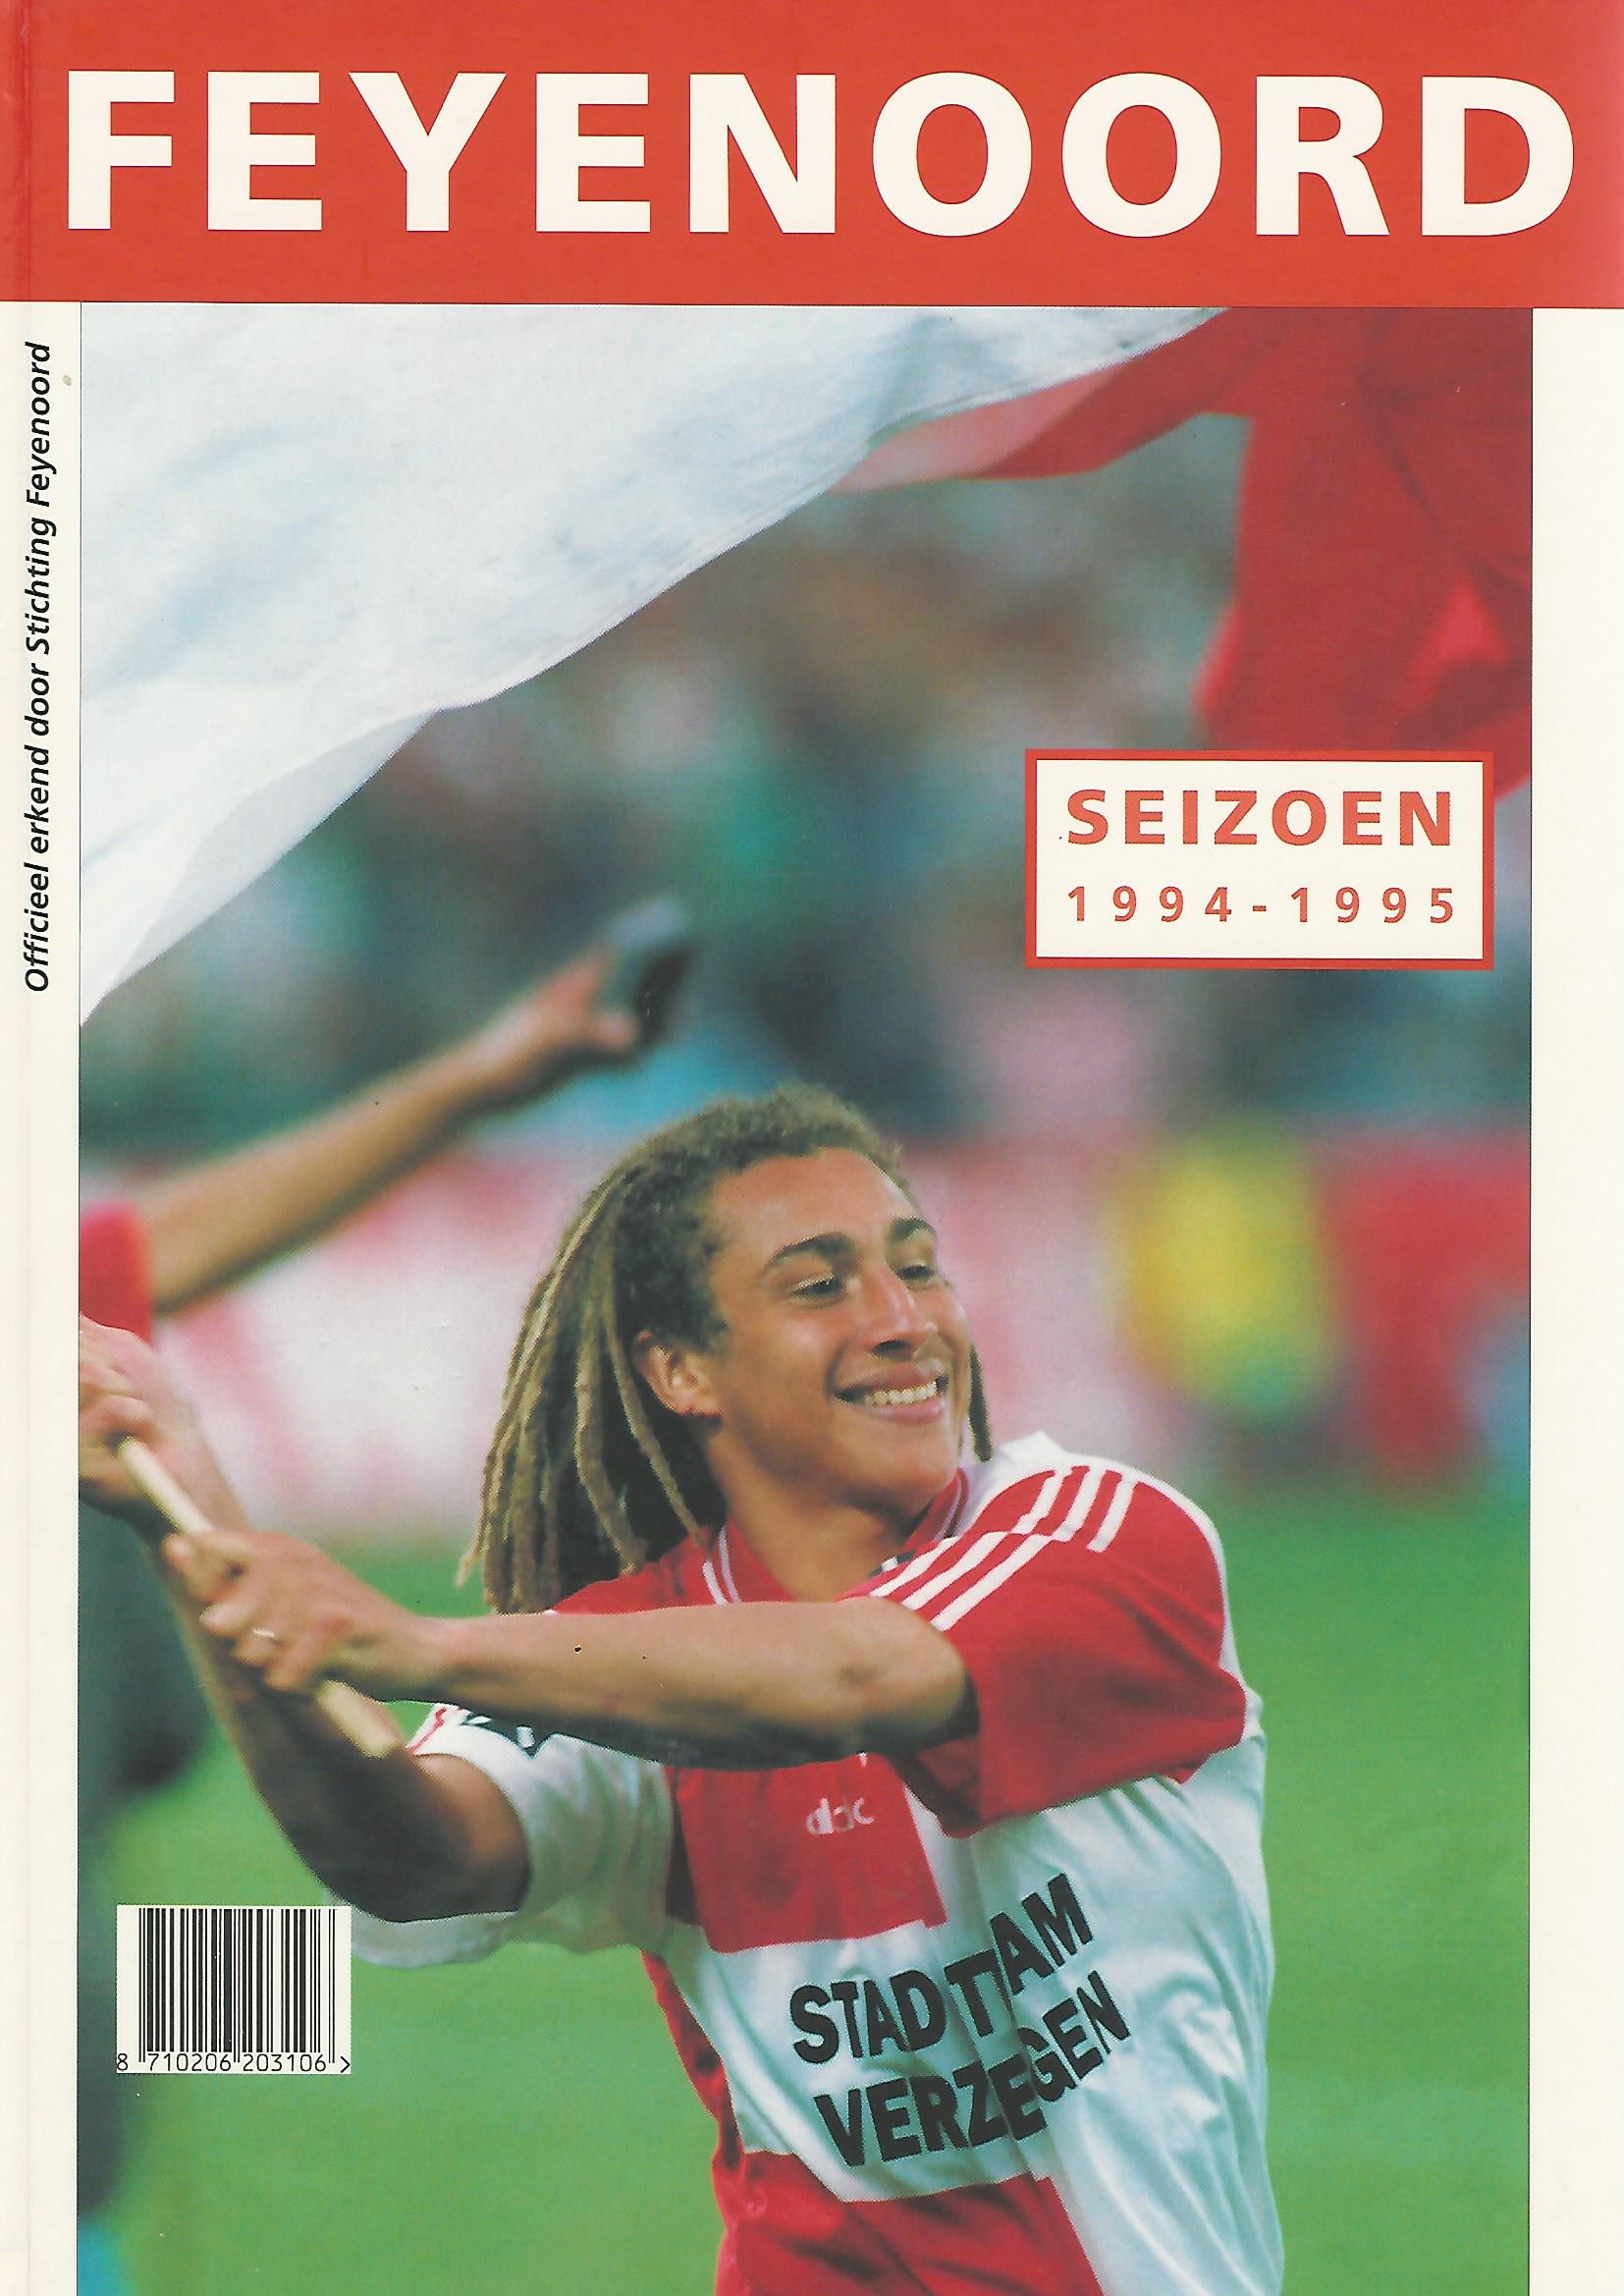 Coolegem, Hans - Feyenoord seizoen 1994-1995